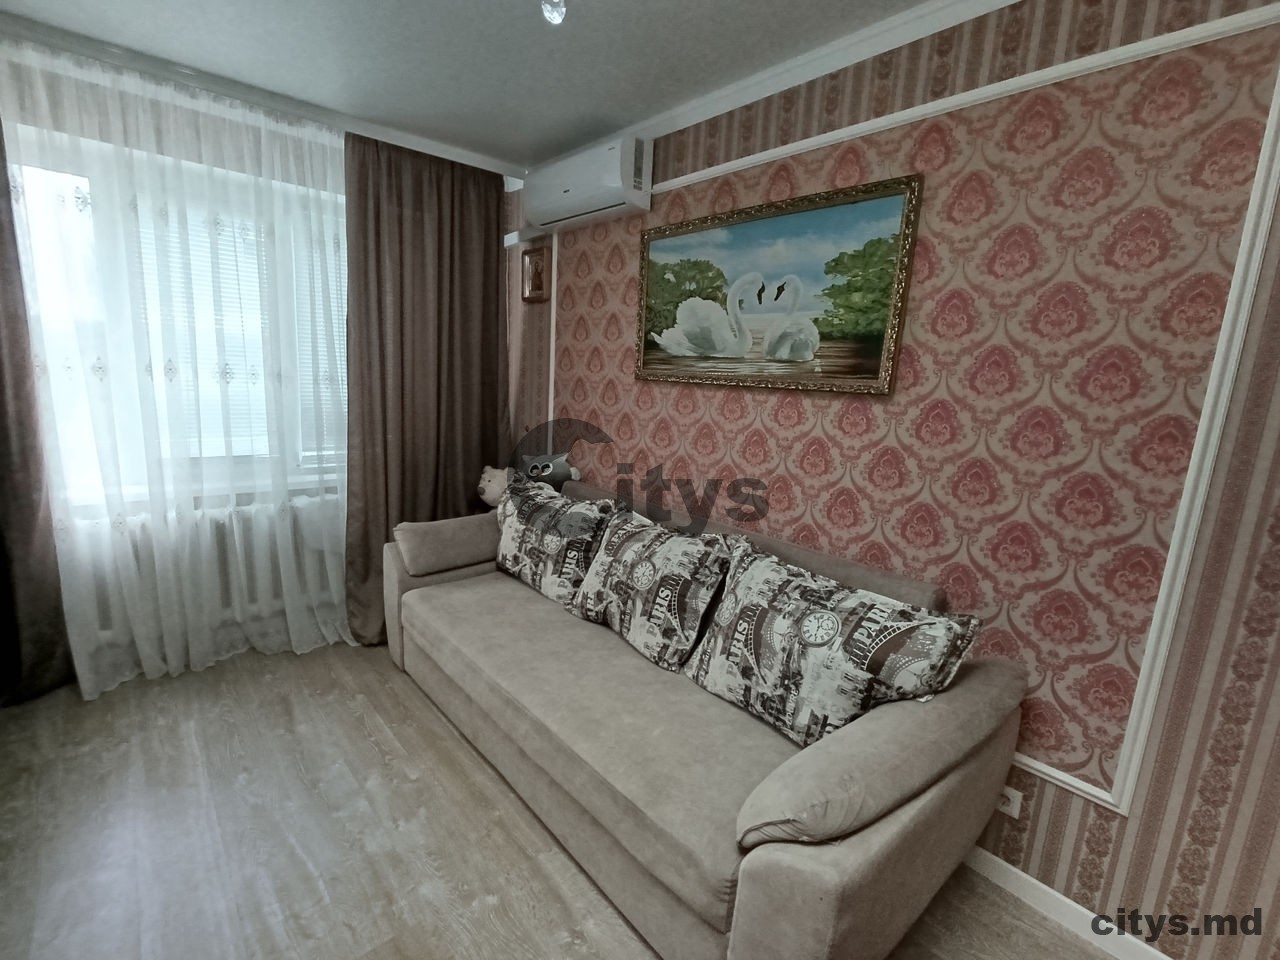 2-х комнатная квартира, 54м², Chișinău, Ciocana, str. Nicolae Milescu Spătarul 5221 photo 6